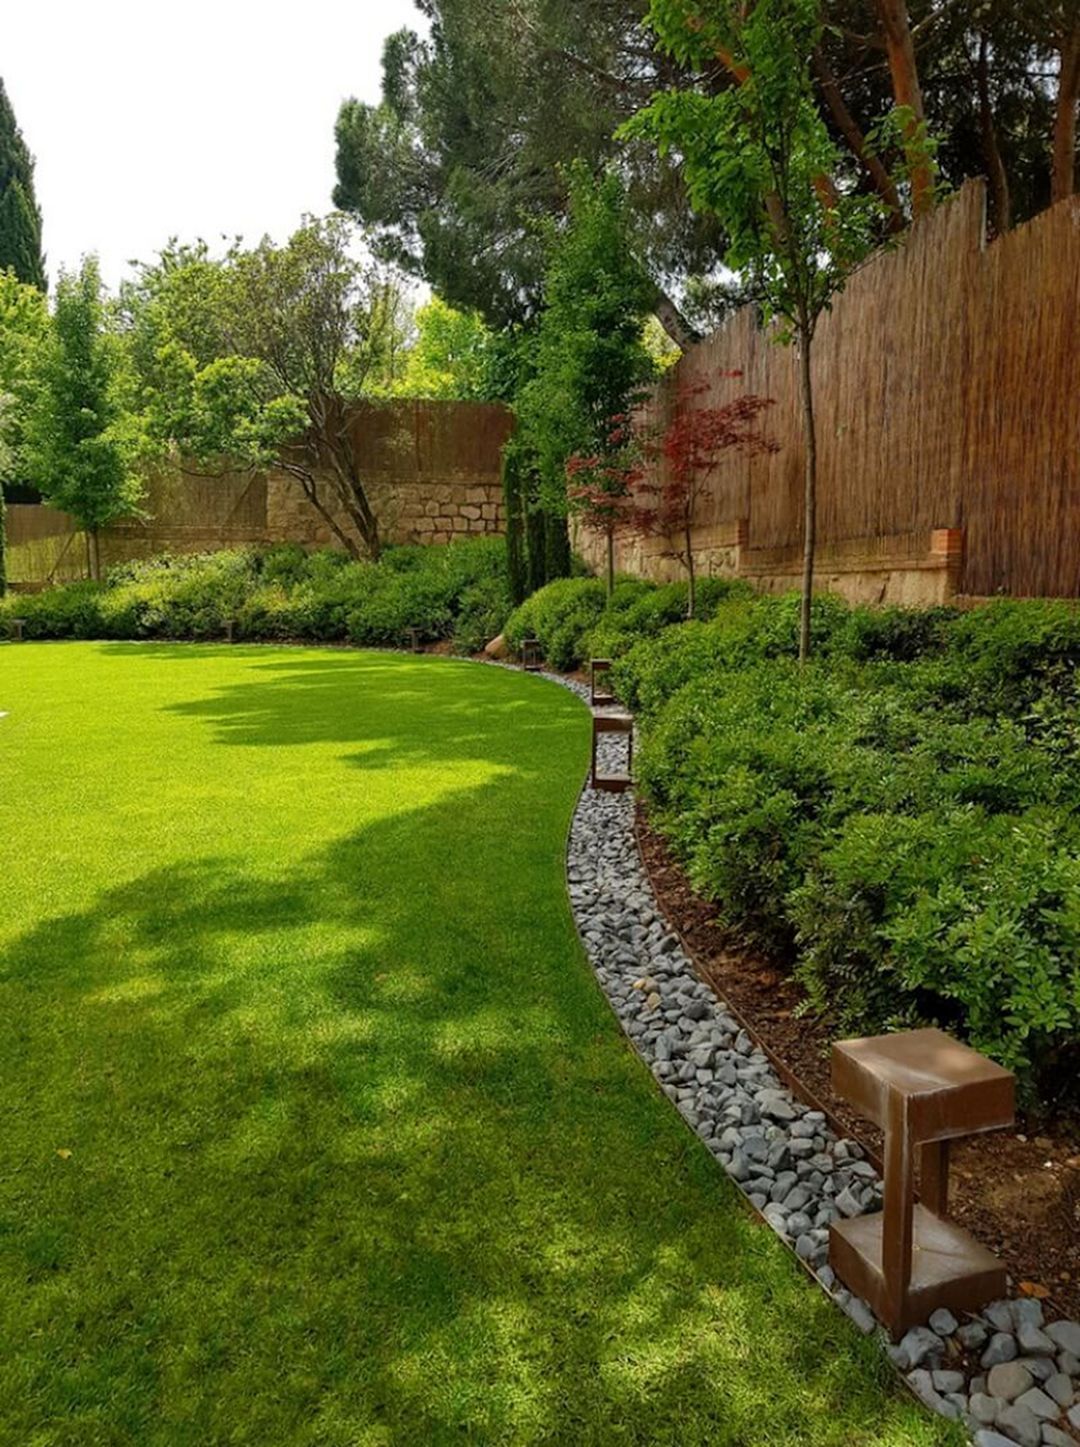 30 Enchanting Backyard Landscaping Ideas With Edging Lawn Decorating -   17 garden design Backyard lawn ideas